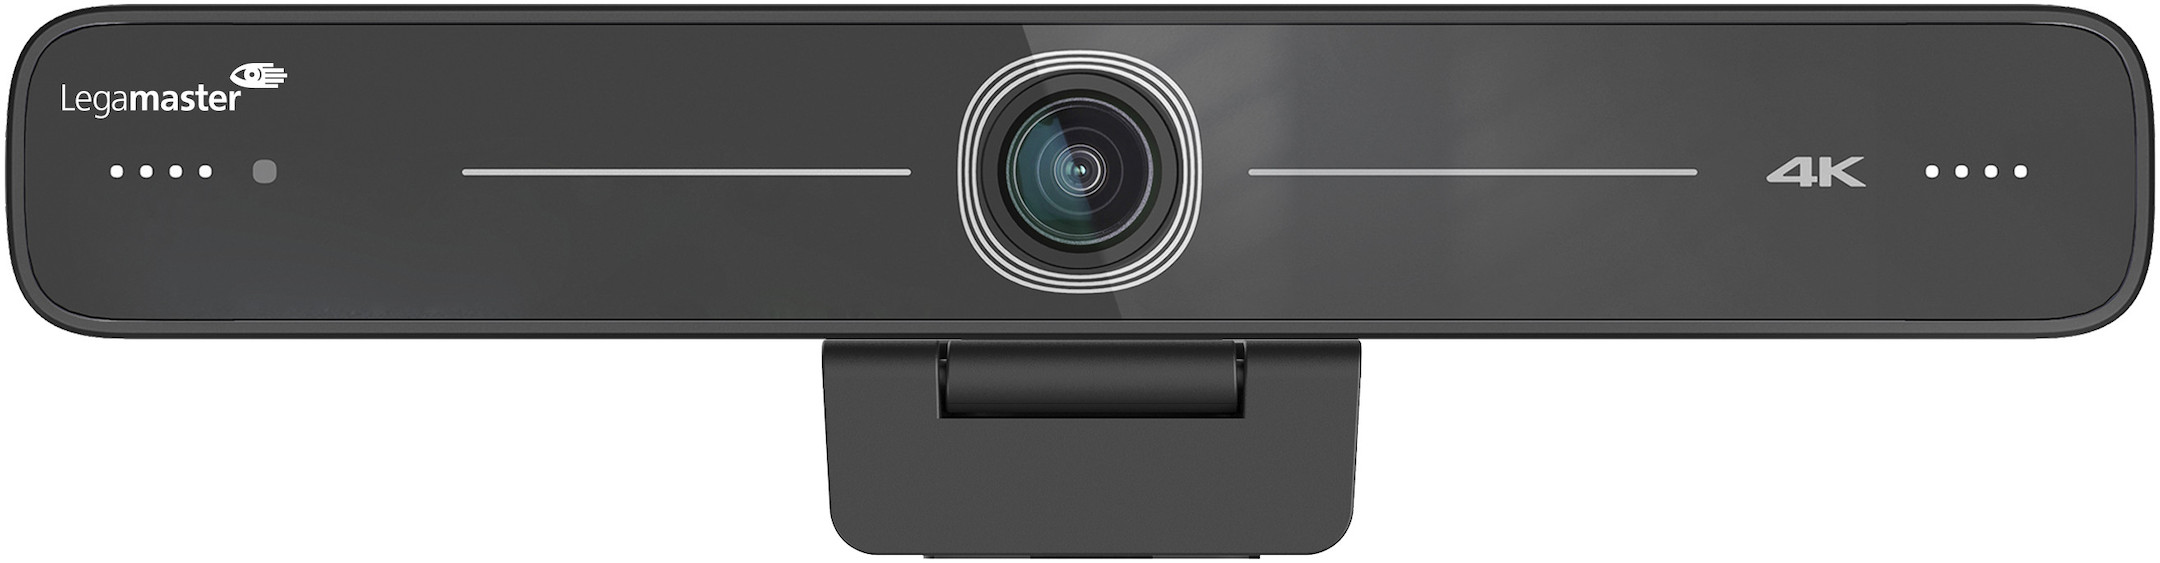 legamaster-easy-view-kamera-4k-eptz